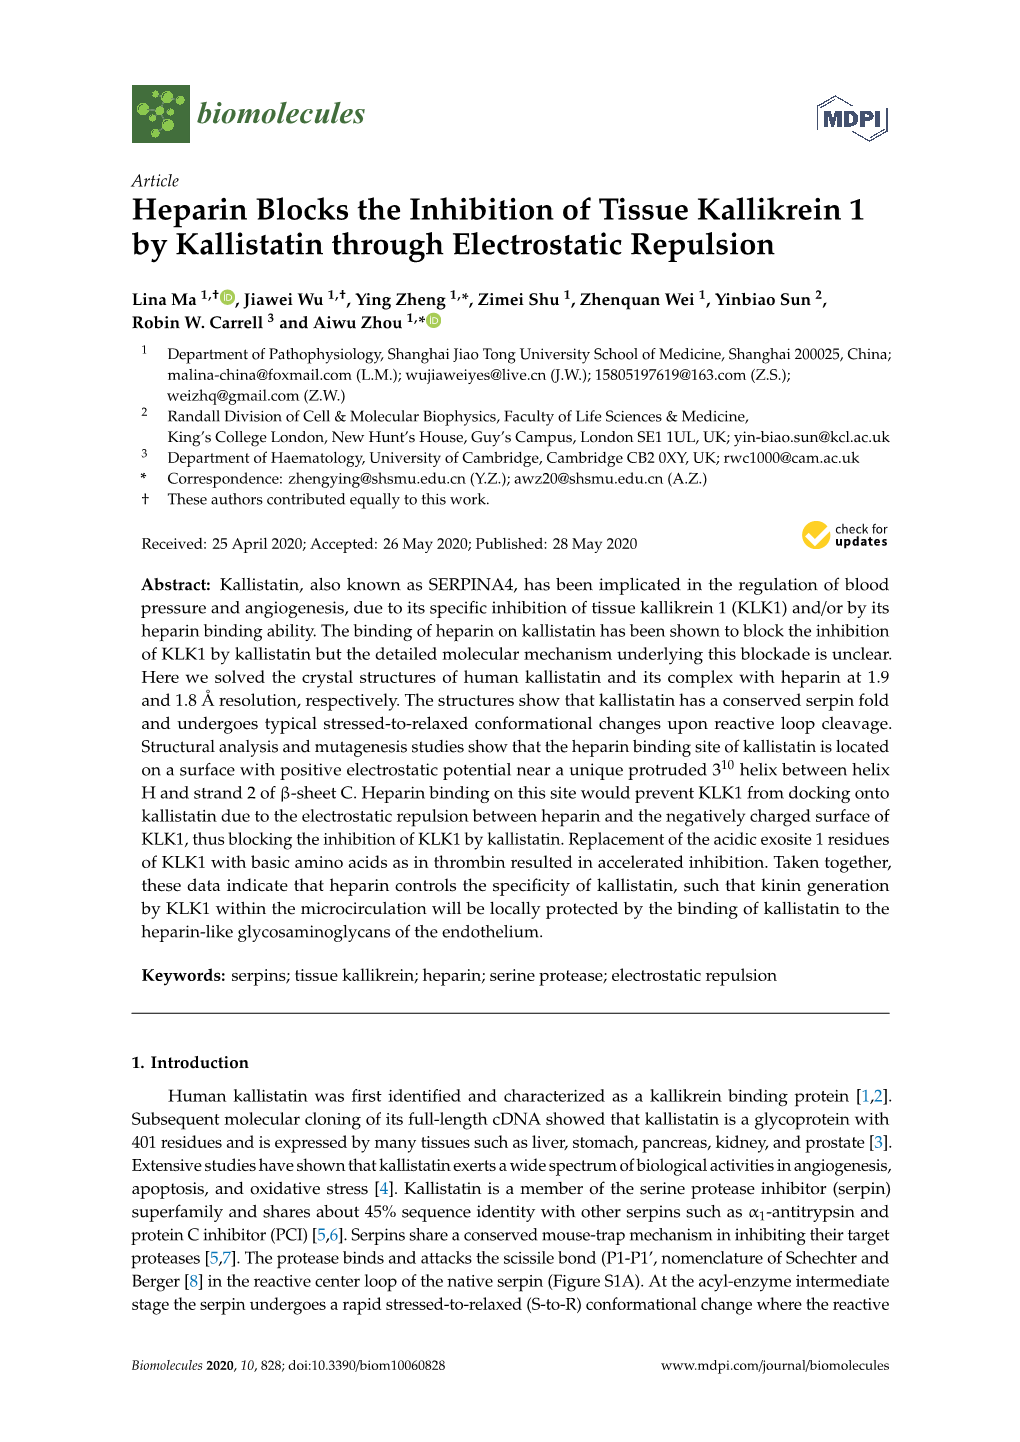 Heparin Blocks the Inhibition of Tissue Kallikrein 1 by Kallistatin Through Electrostatic Repulsion